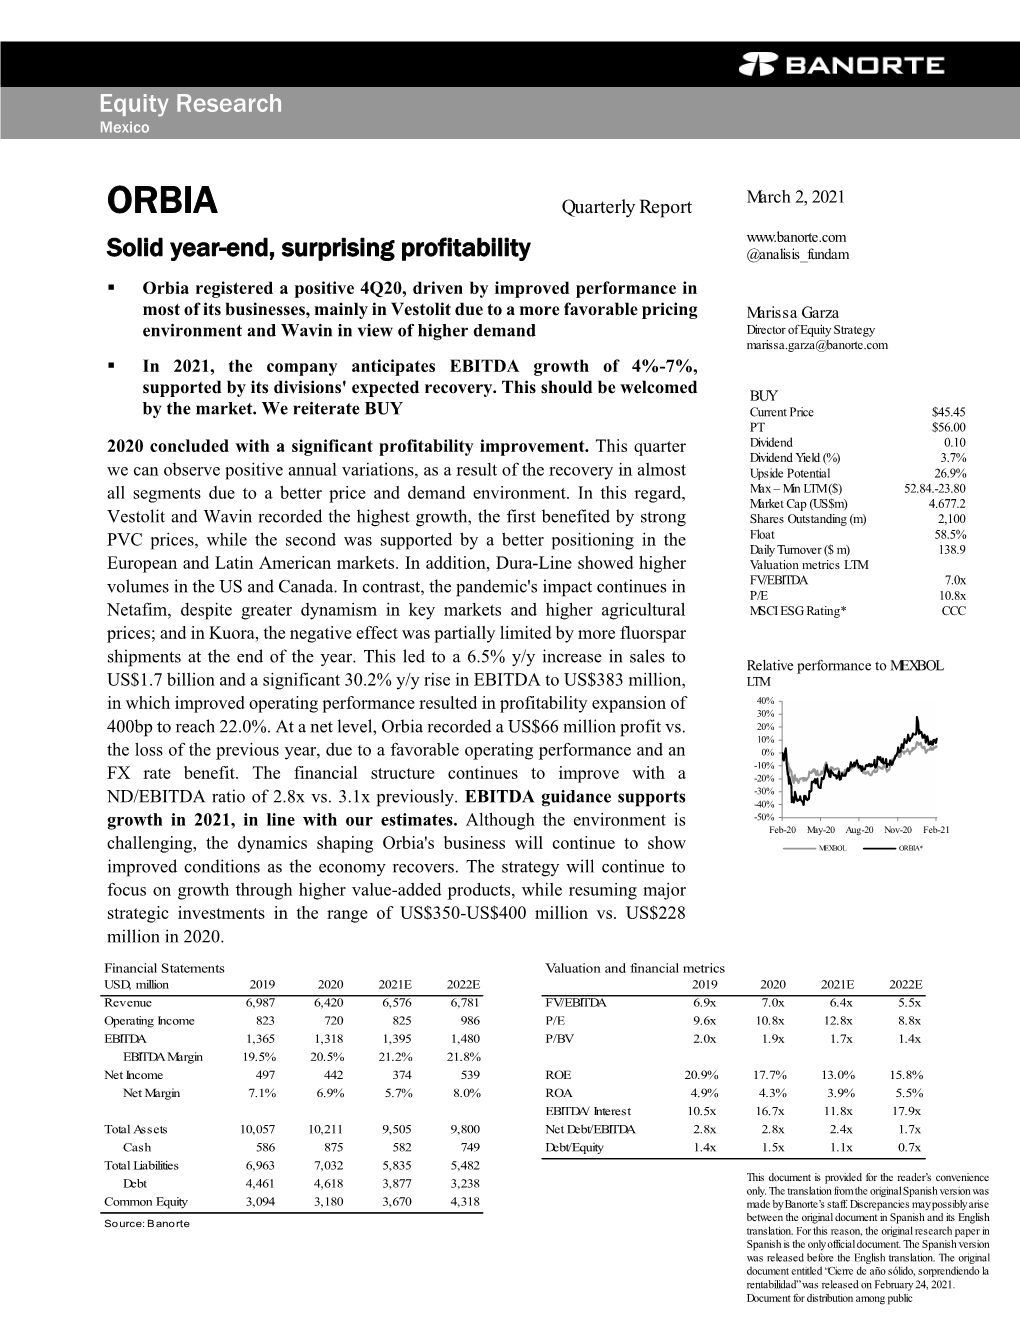 ORBIA Solid Year-End, Surprising Profitability @Analisis Fundam